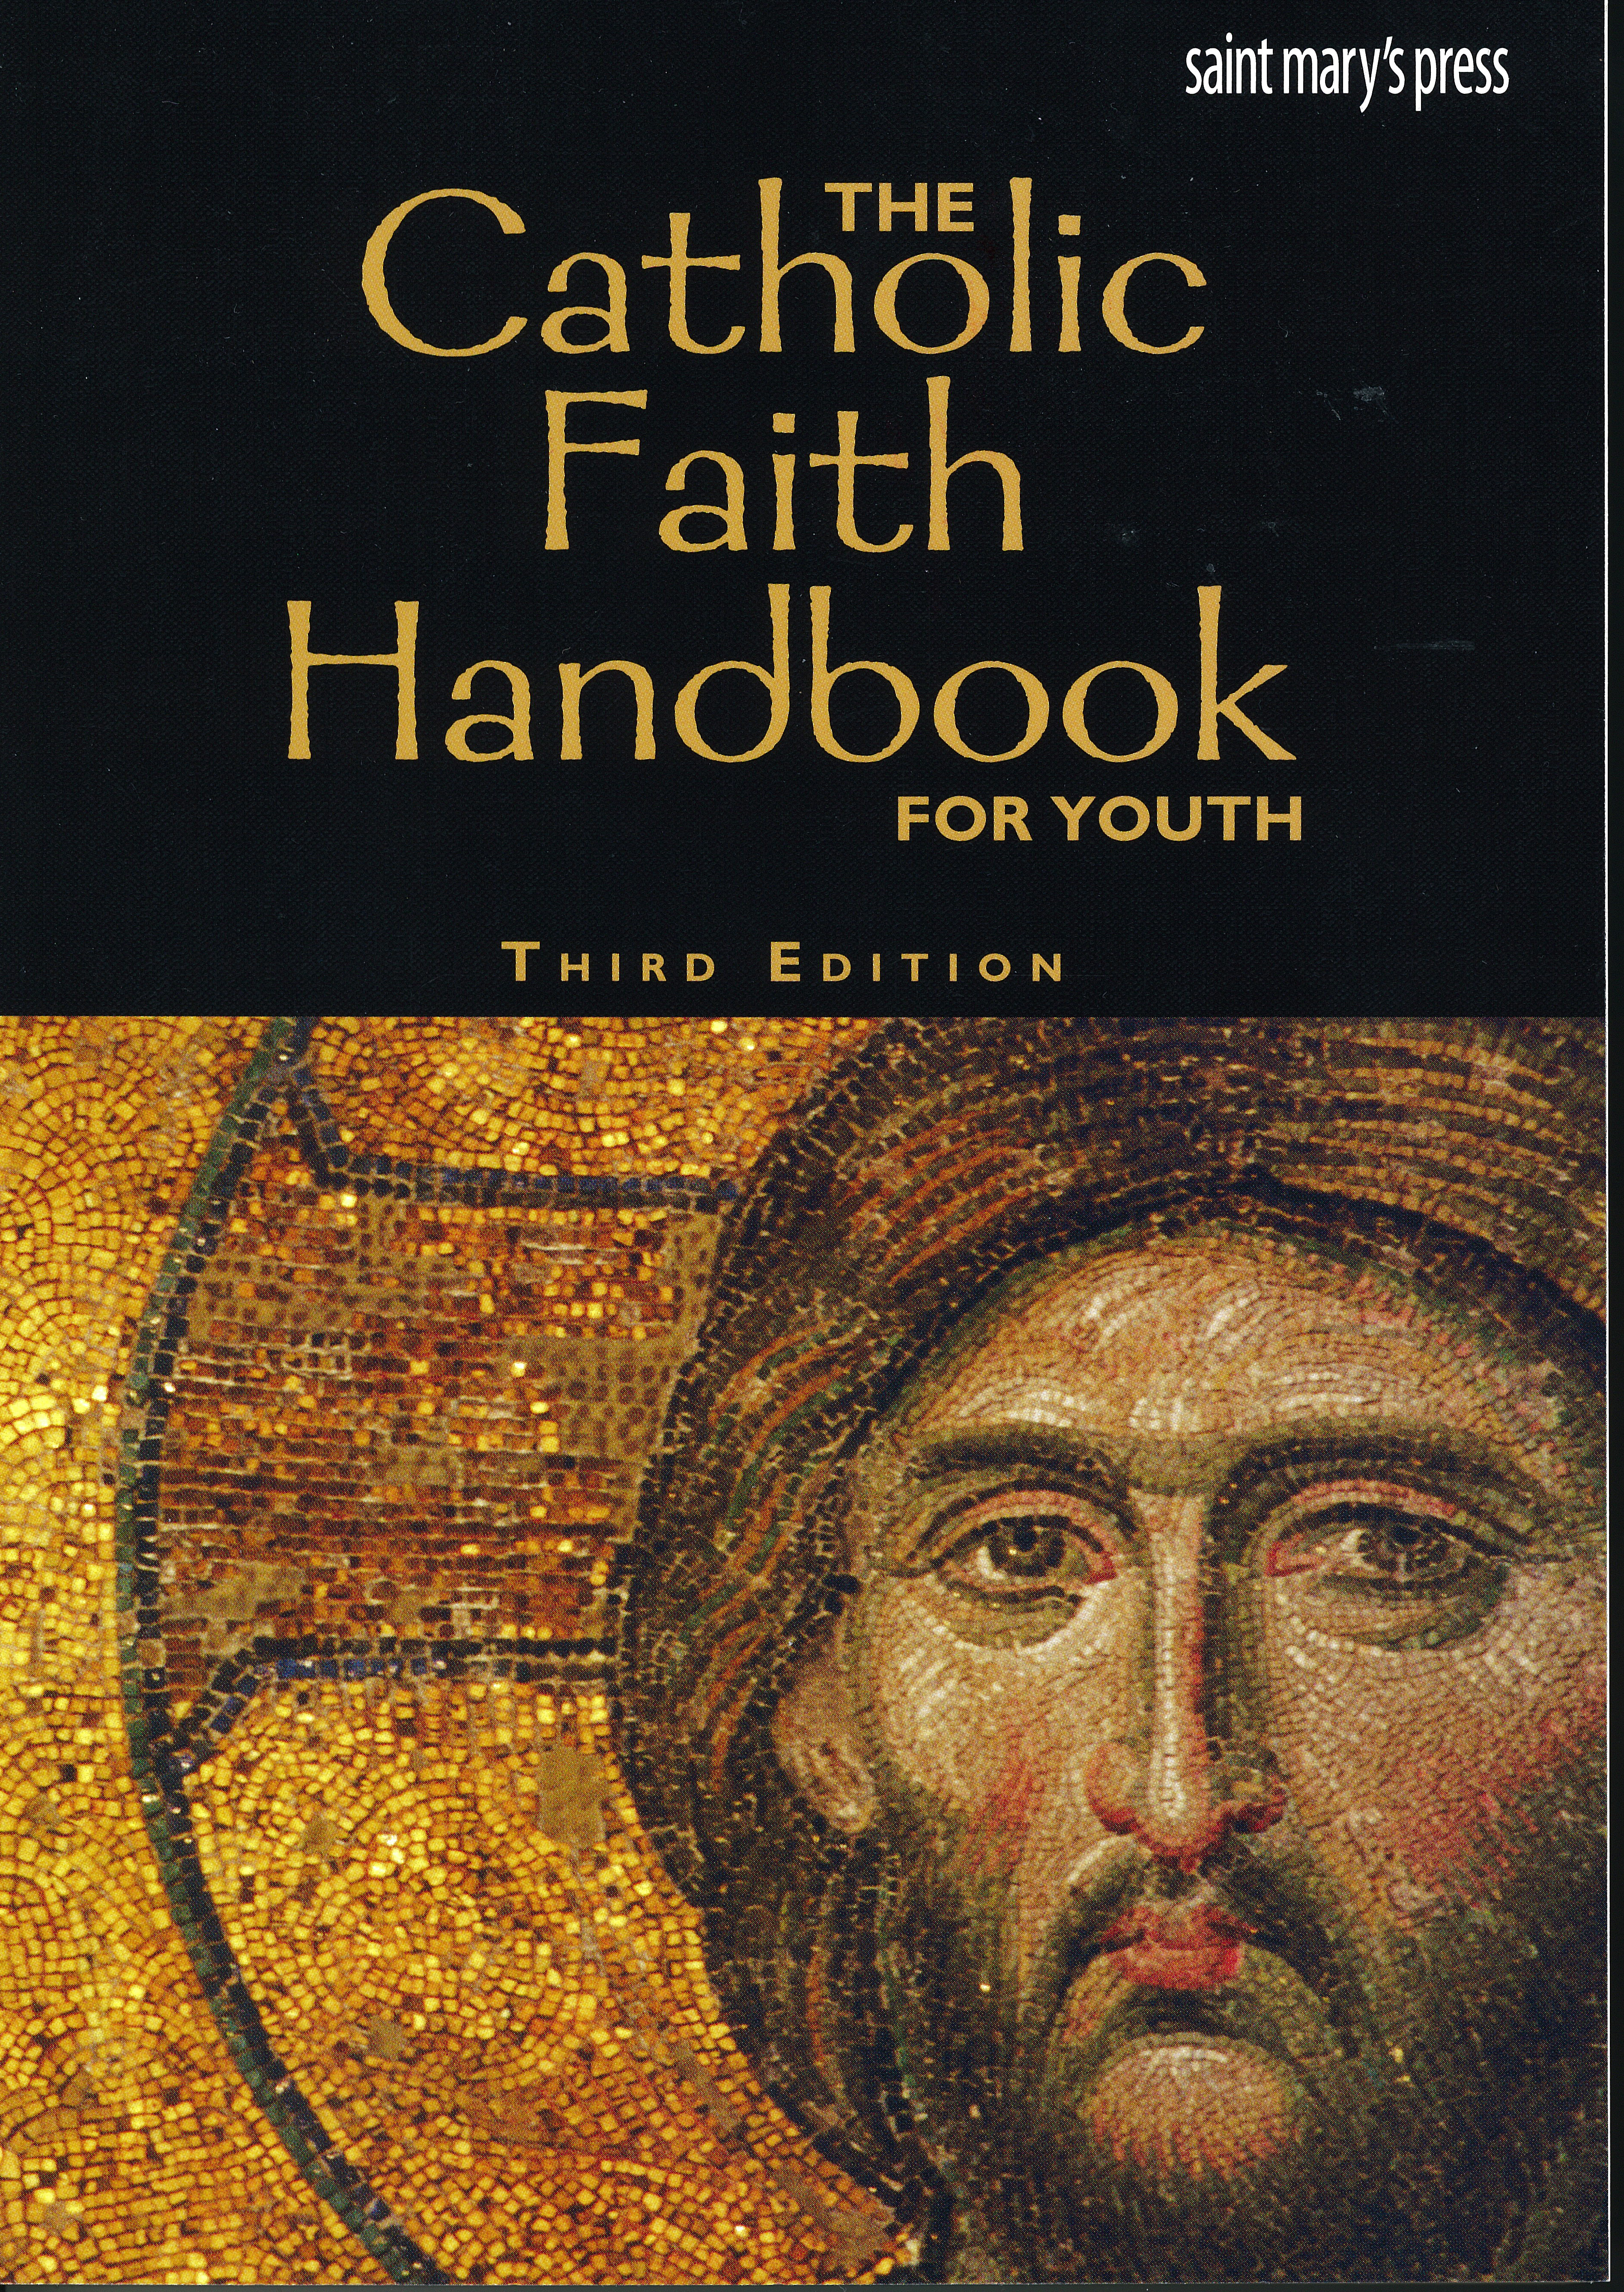 The Catholic Faith Handbook for Youth, Third Edition, from Saint Mary's Press 69-9781599821603